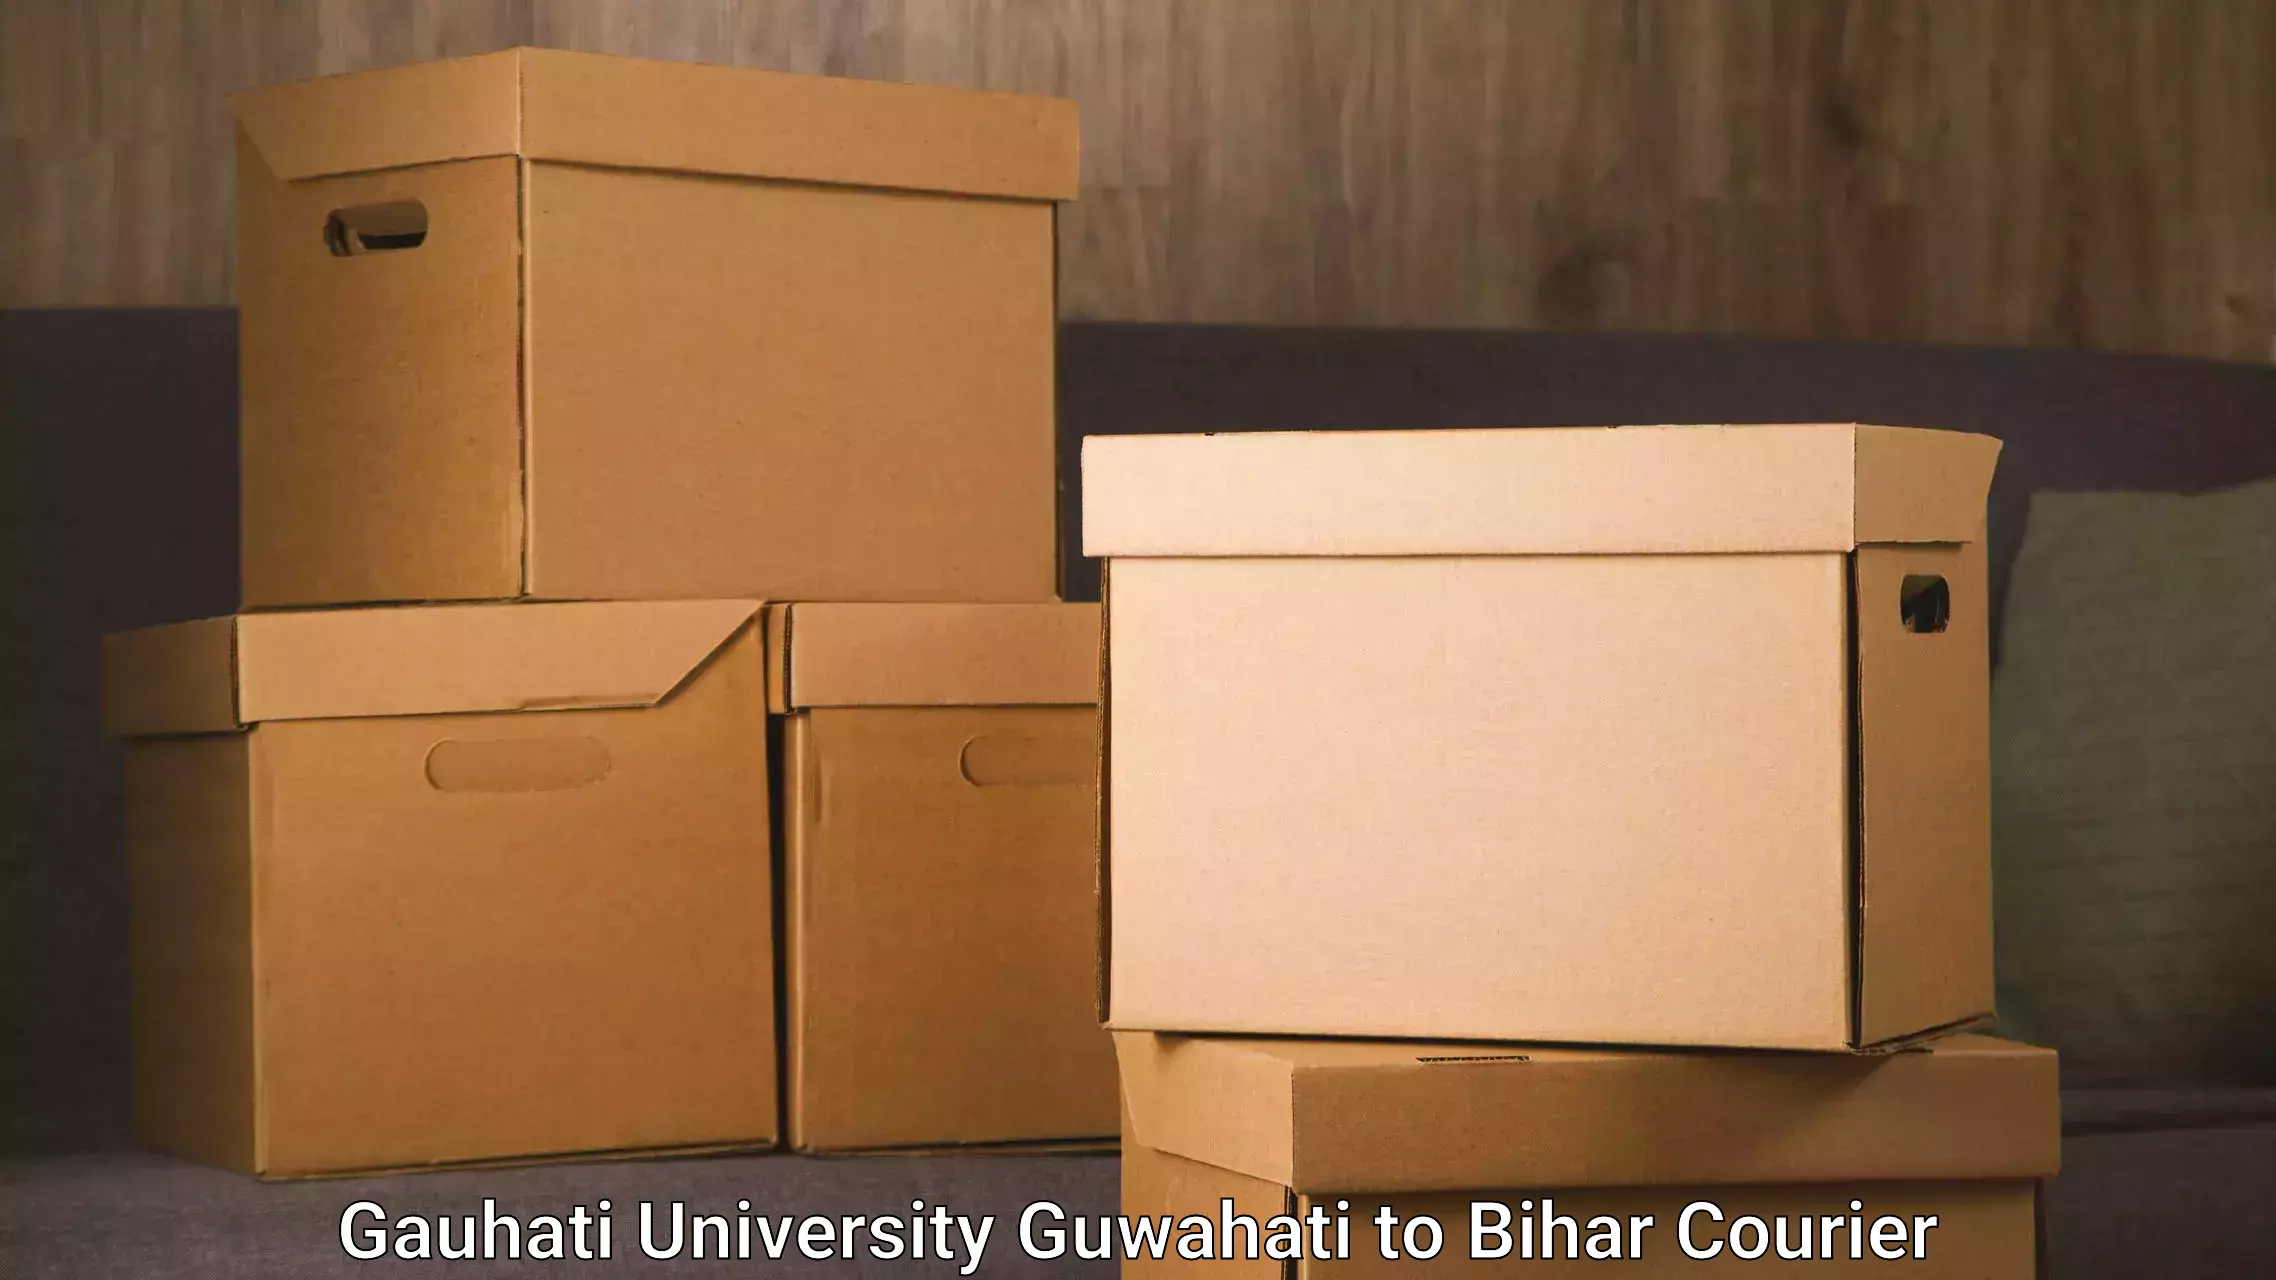 Automated parcel services Gauhati University Guwahati to Dhaka